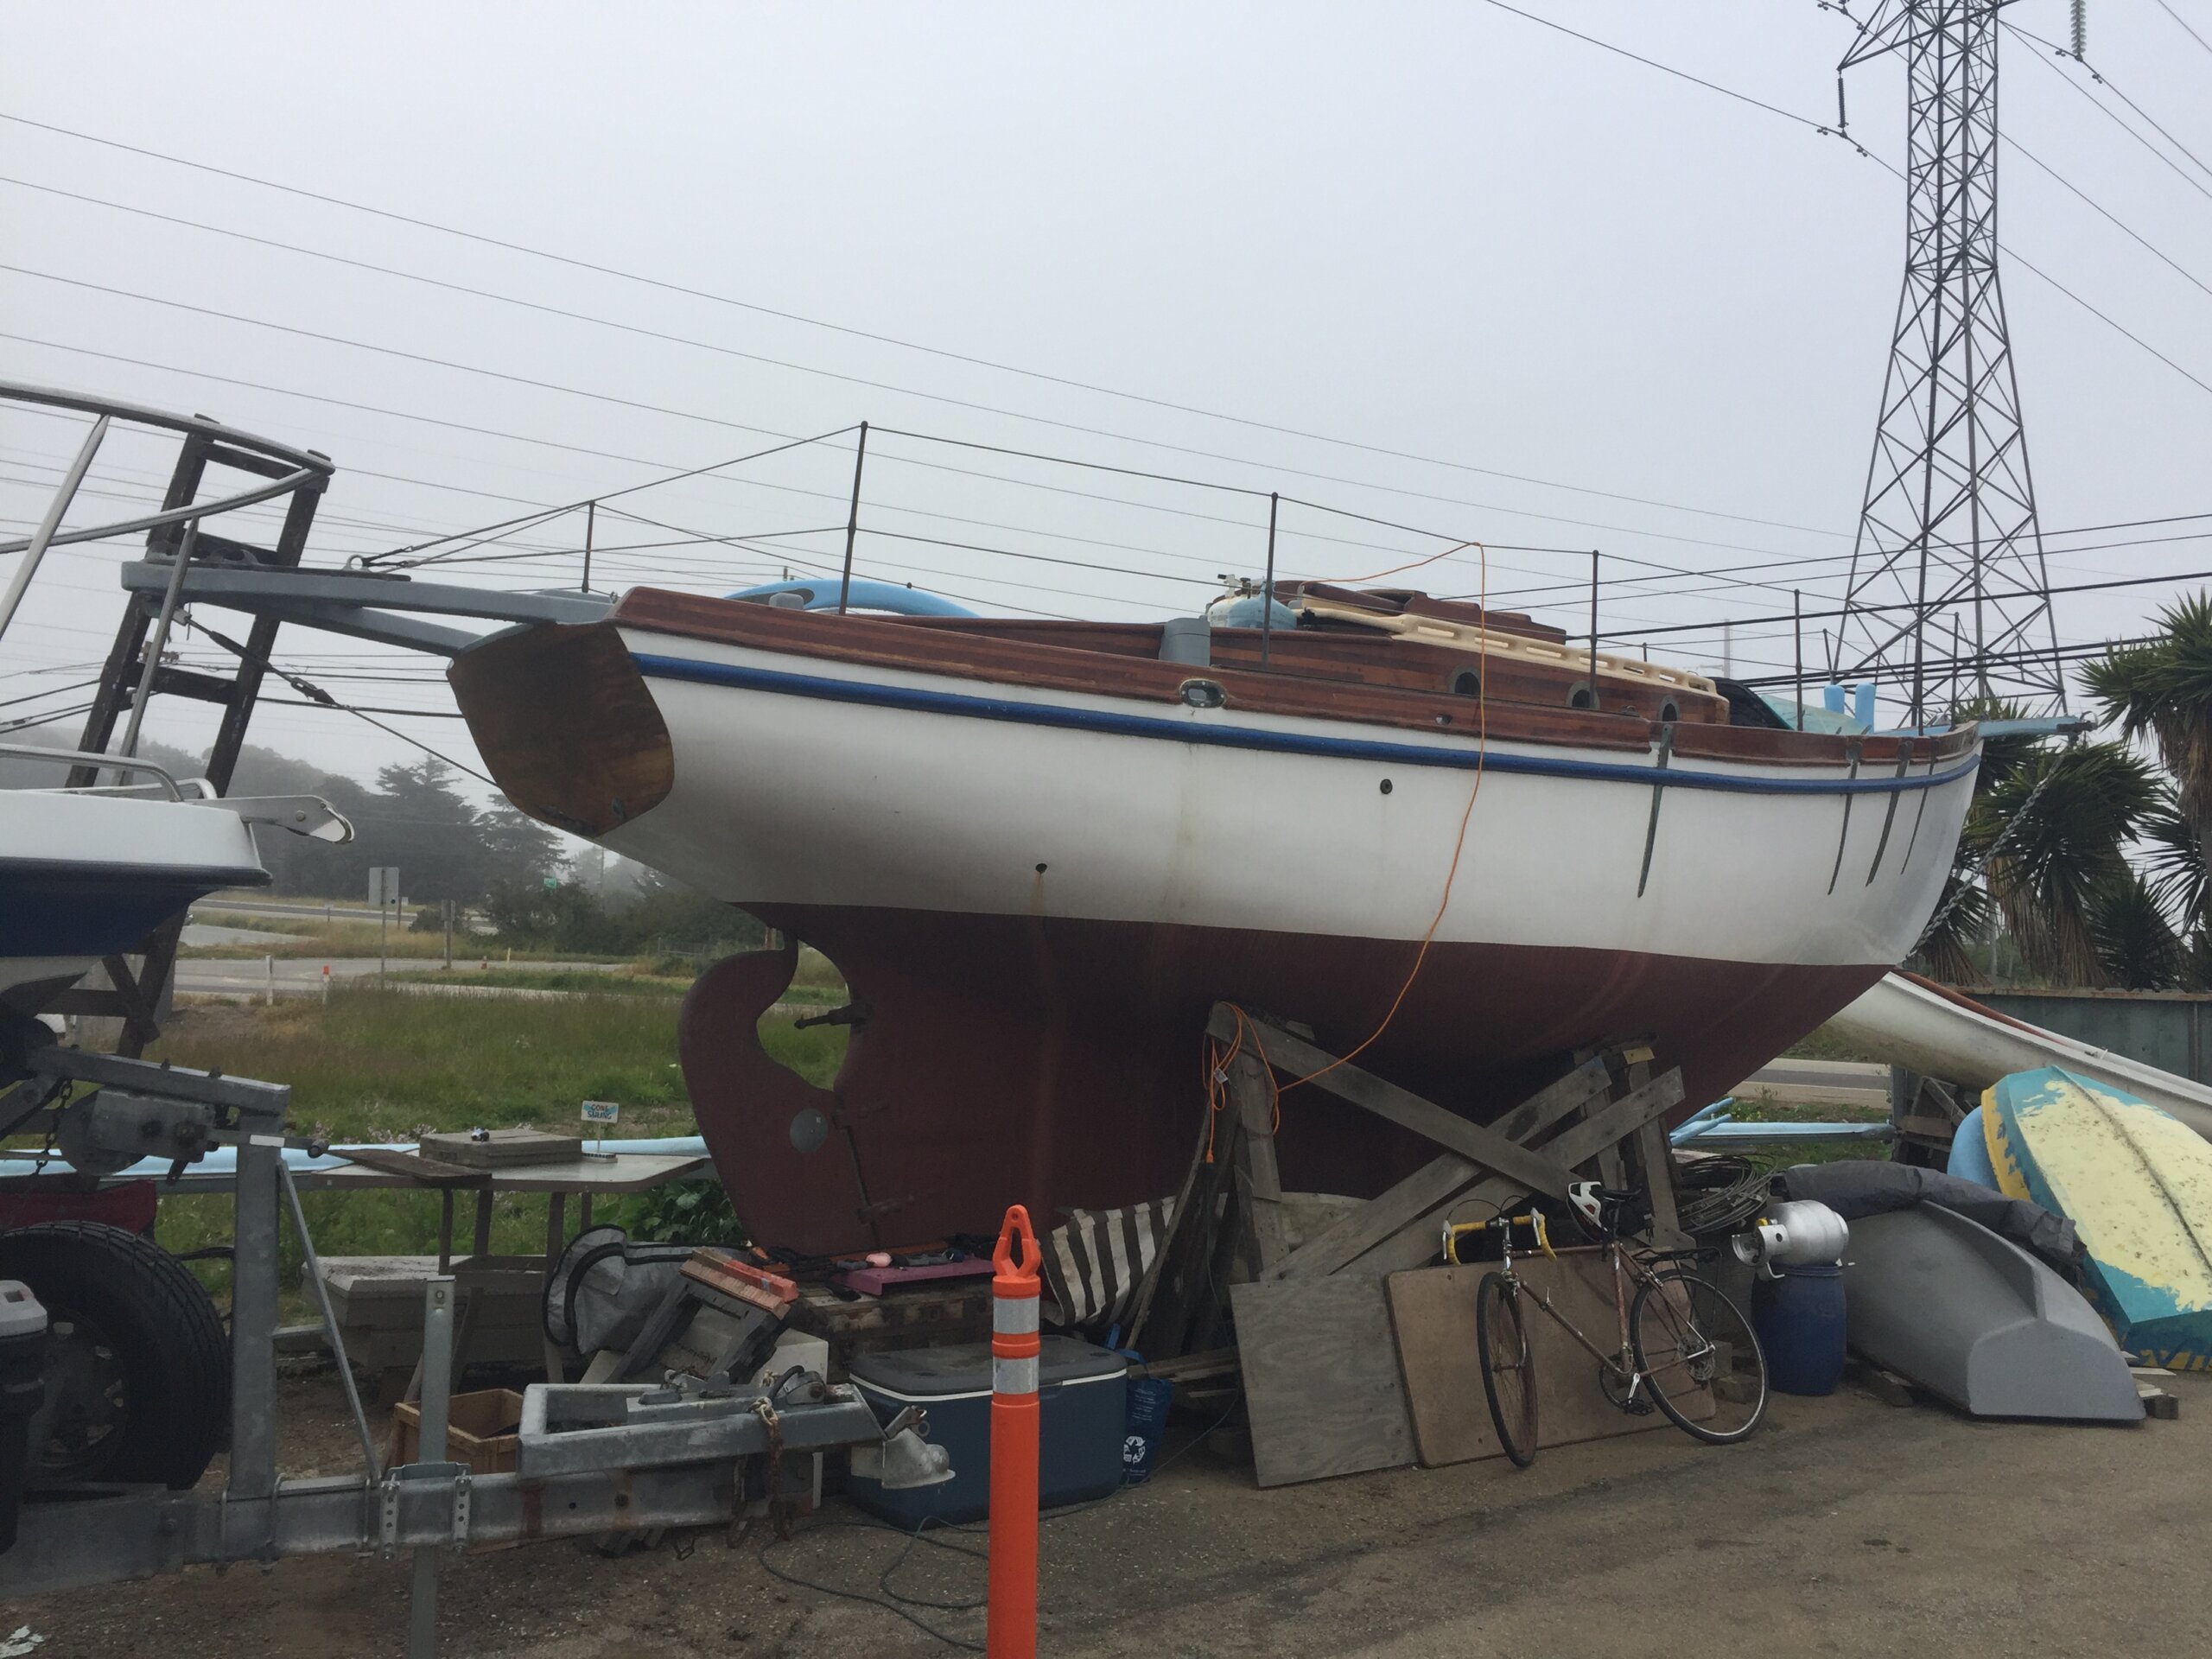 Sailboat stored in a boatyard in Morro Bay